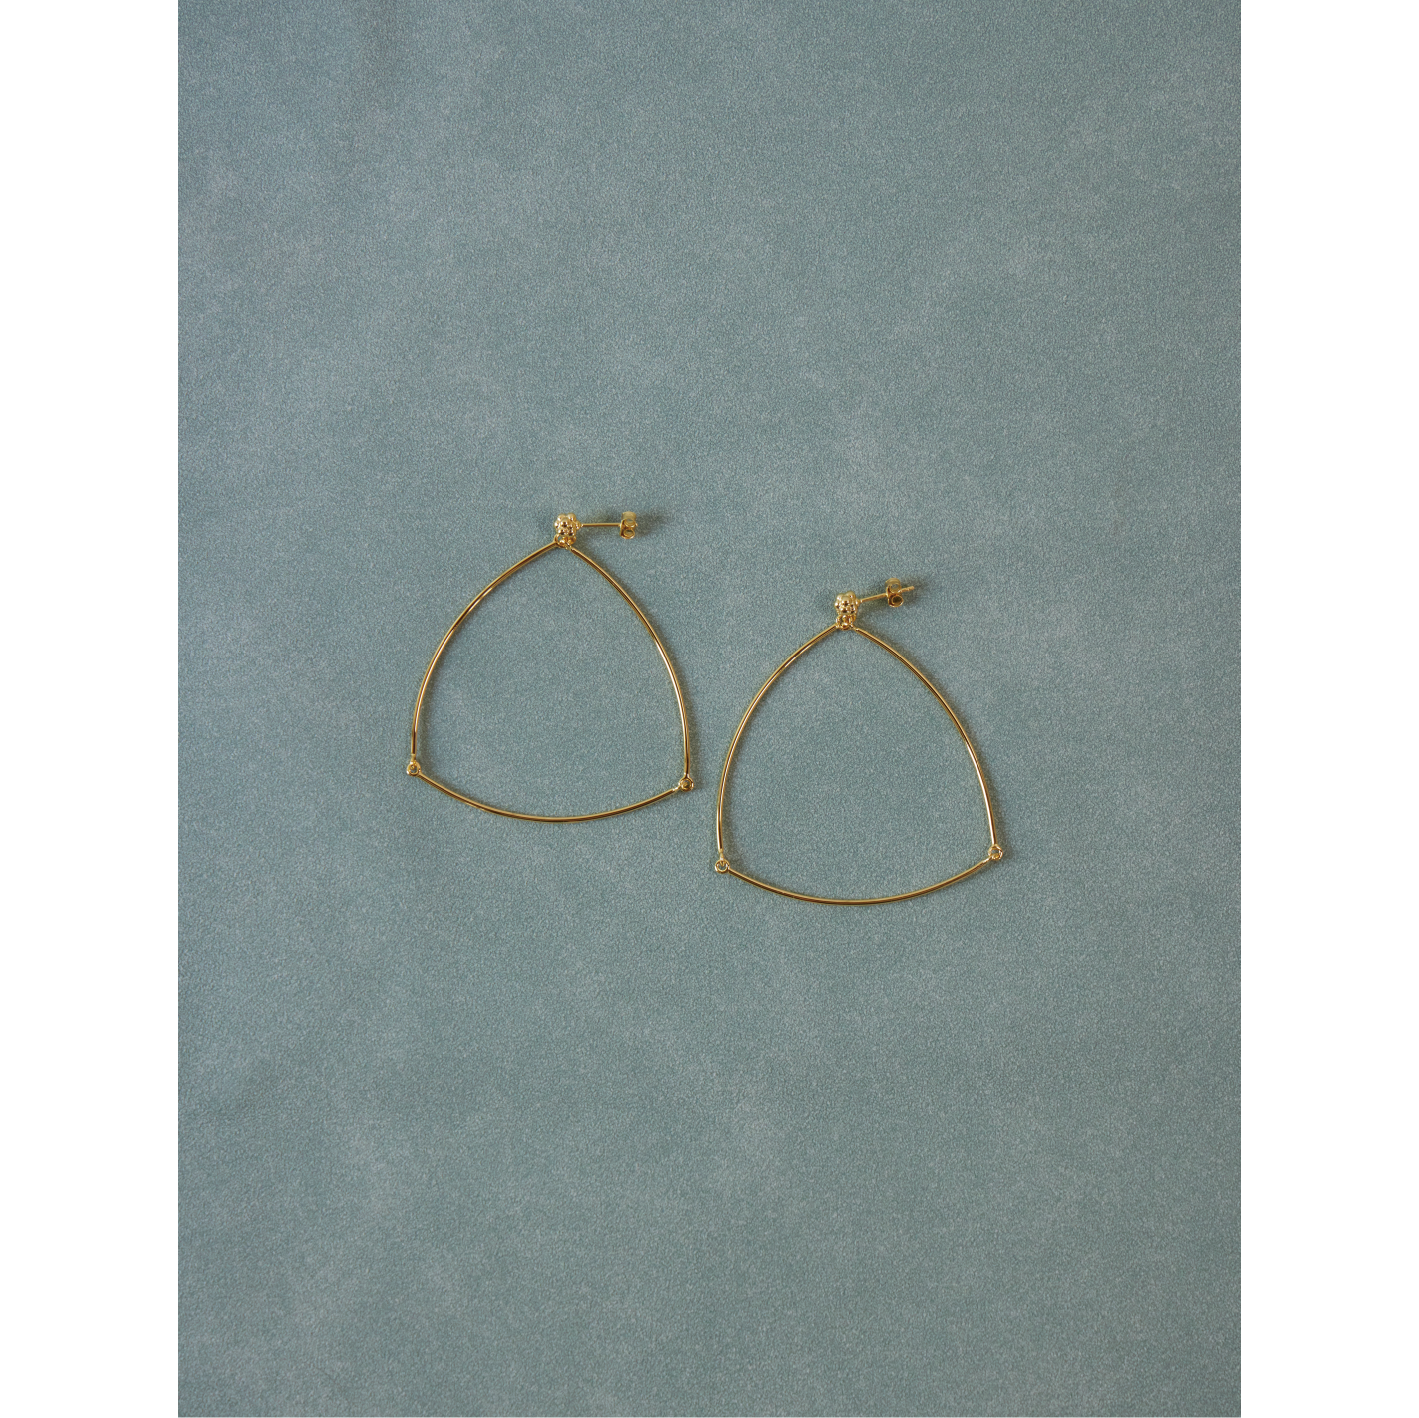 SEAFO - Kintsugi Triangle Earrings Silver/Gold